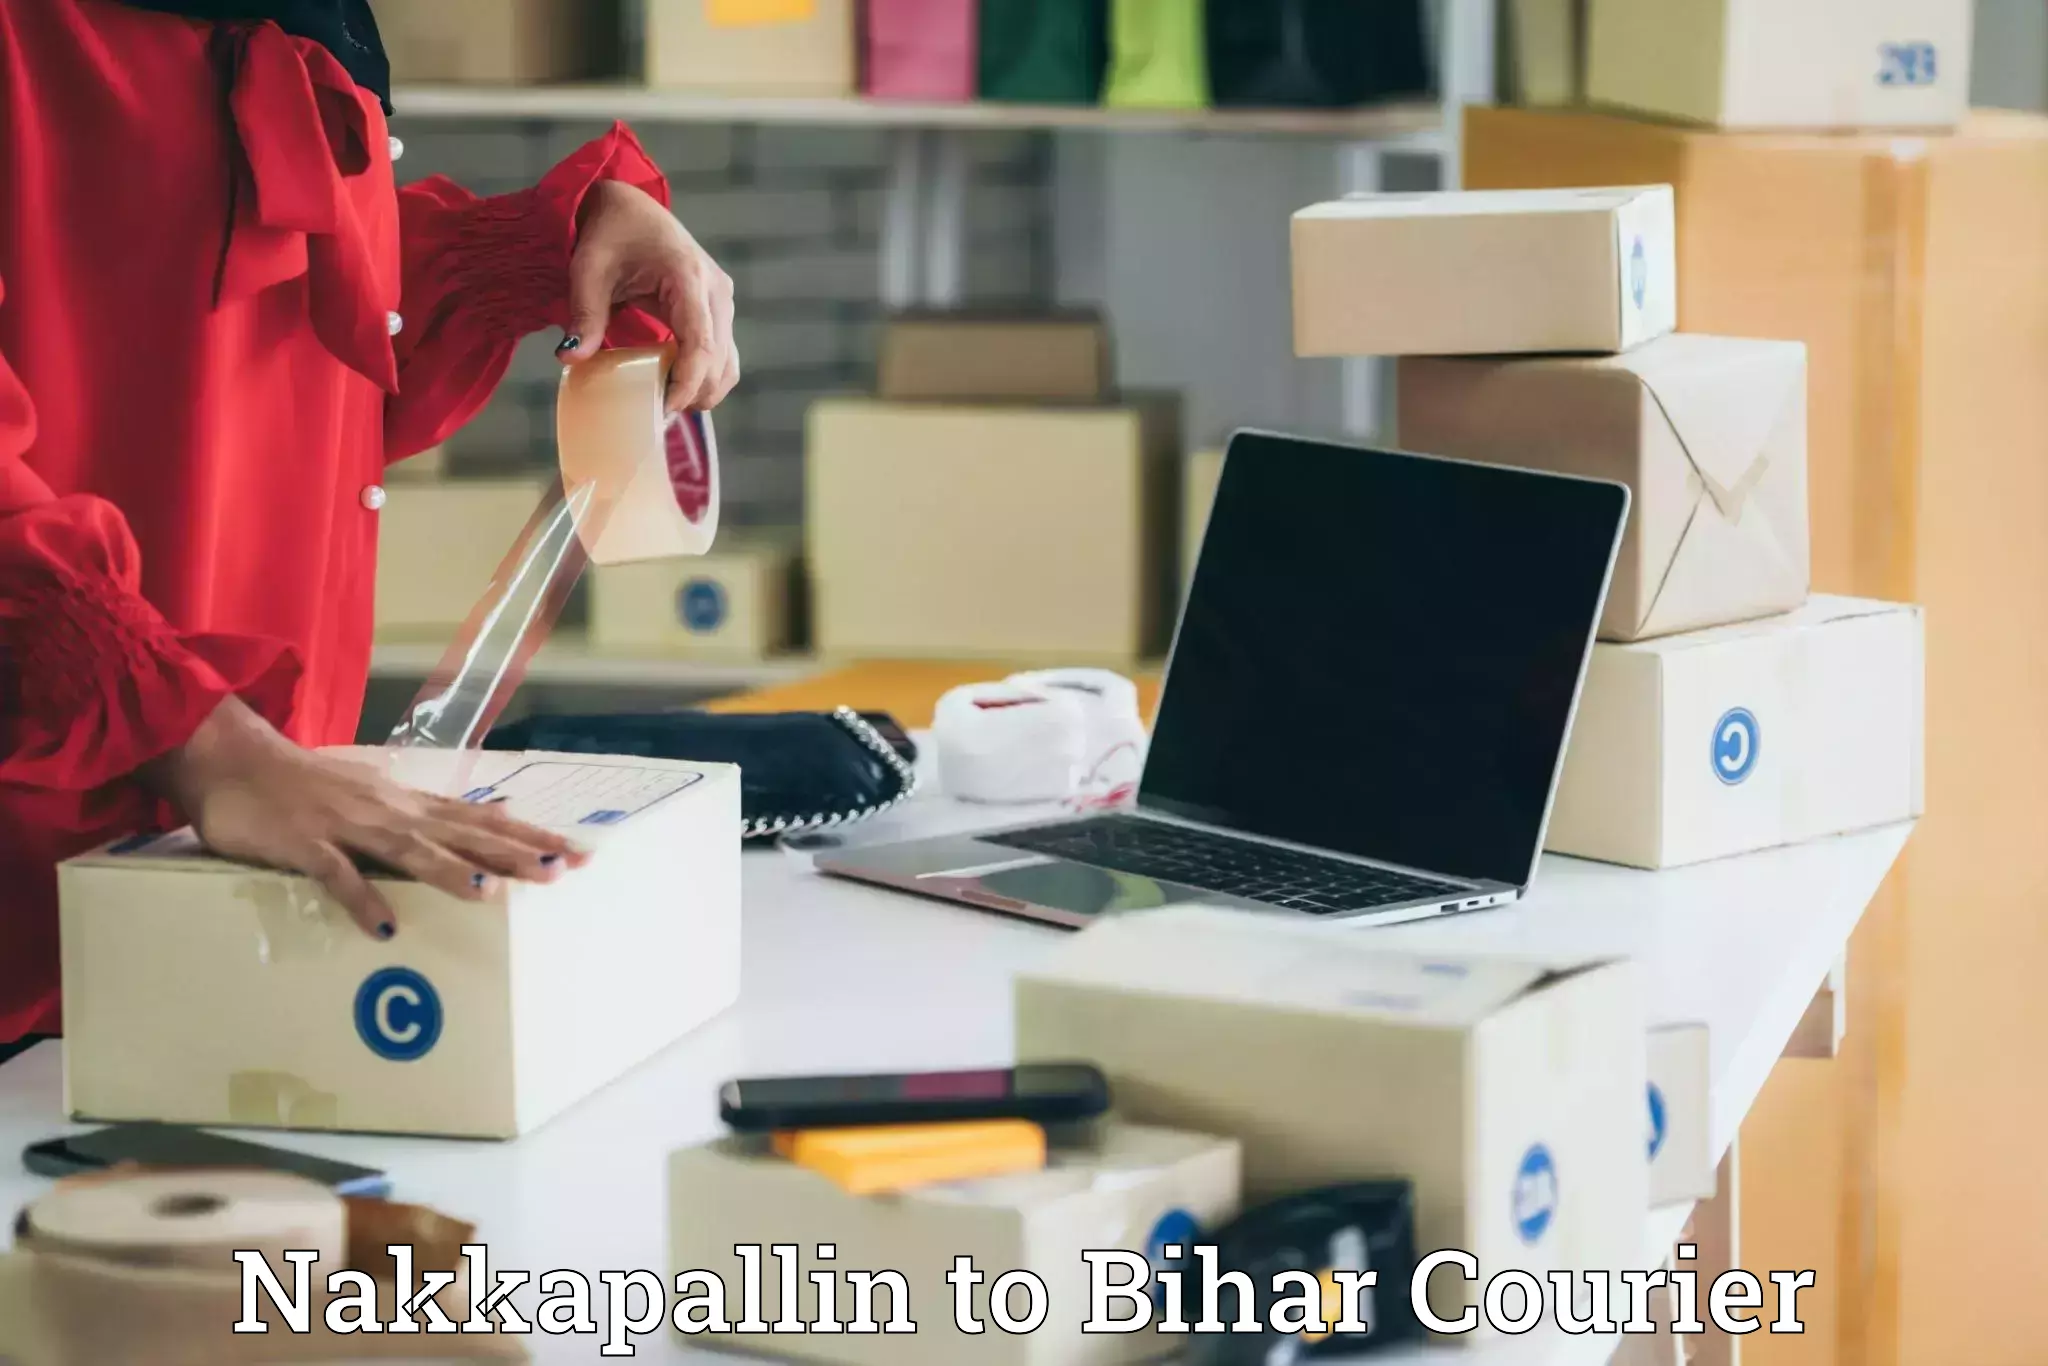 State-of-the-art courier technology Nakkapallin to Aurai